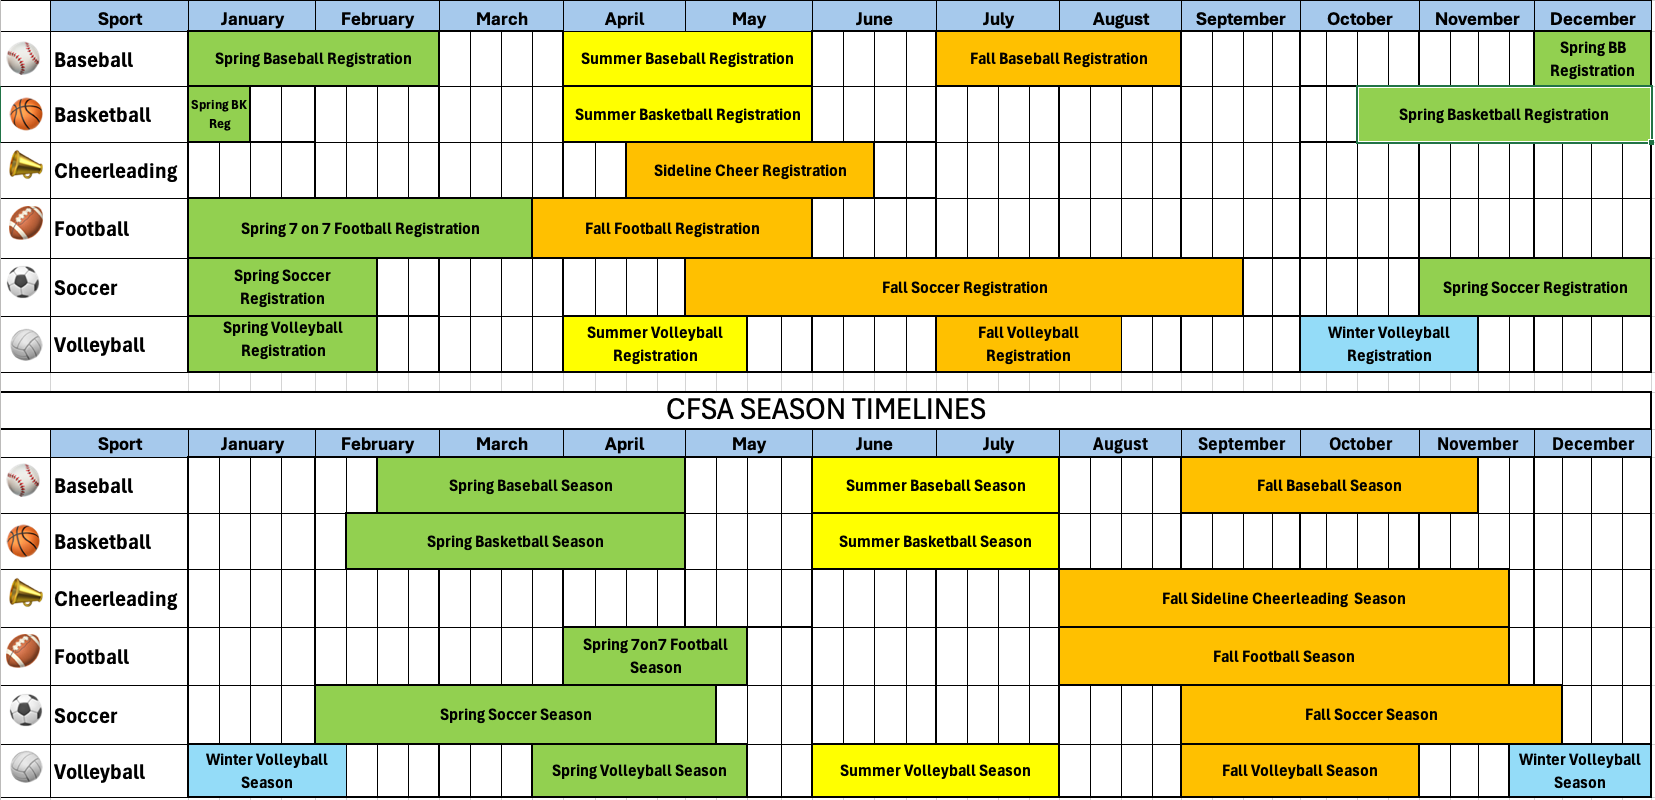 CFSA season registration timeline chart